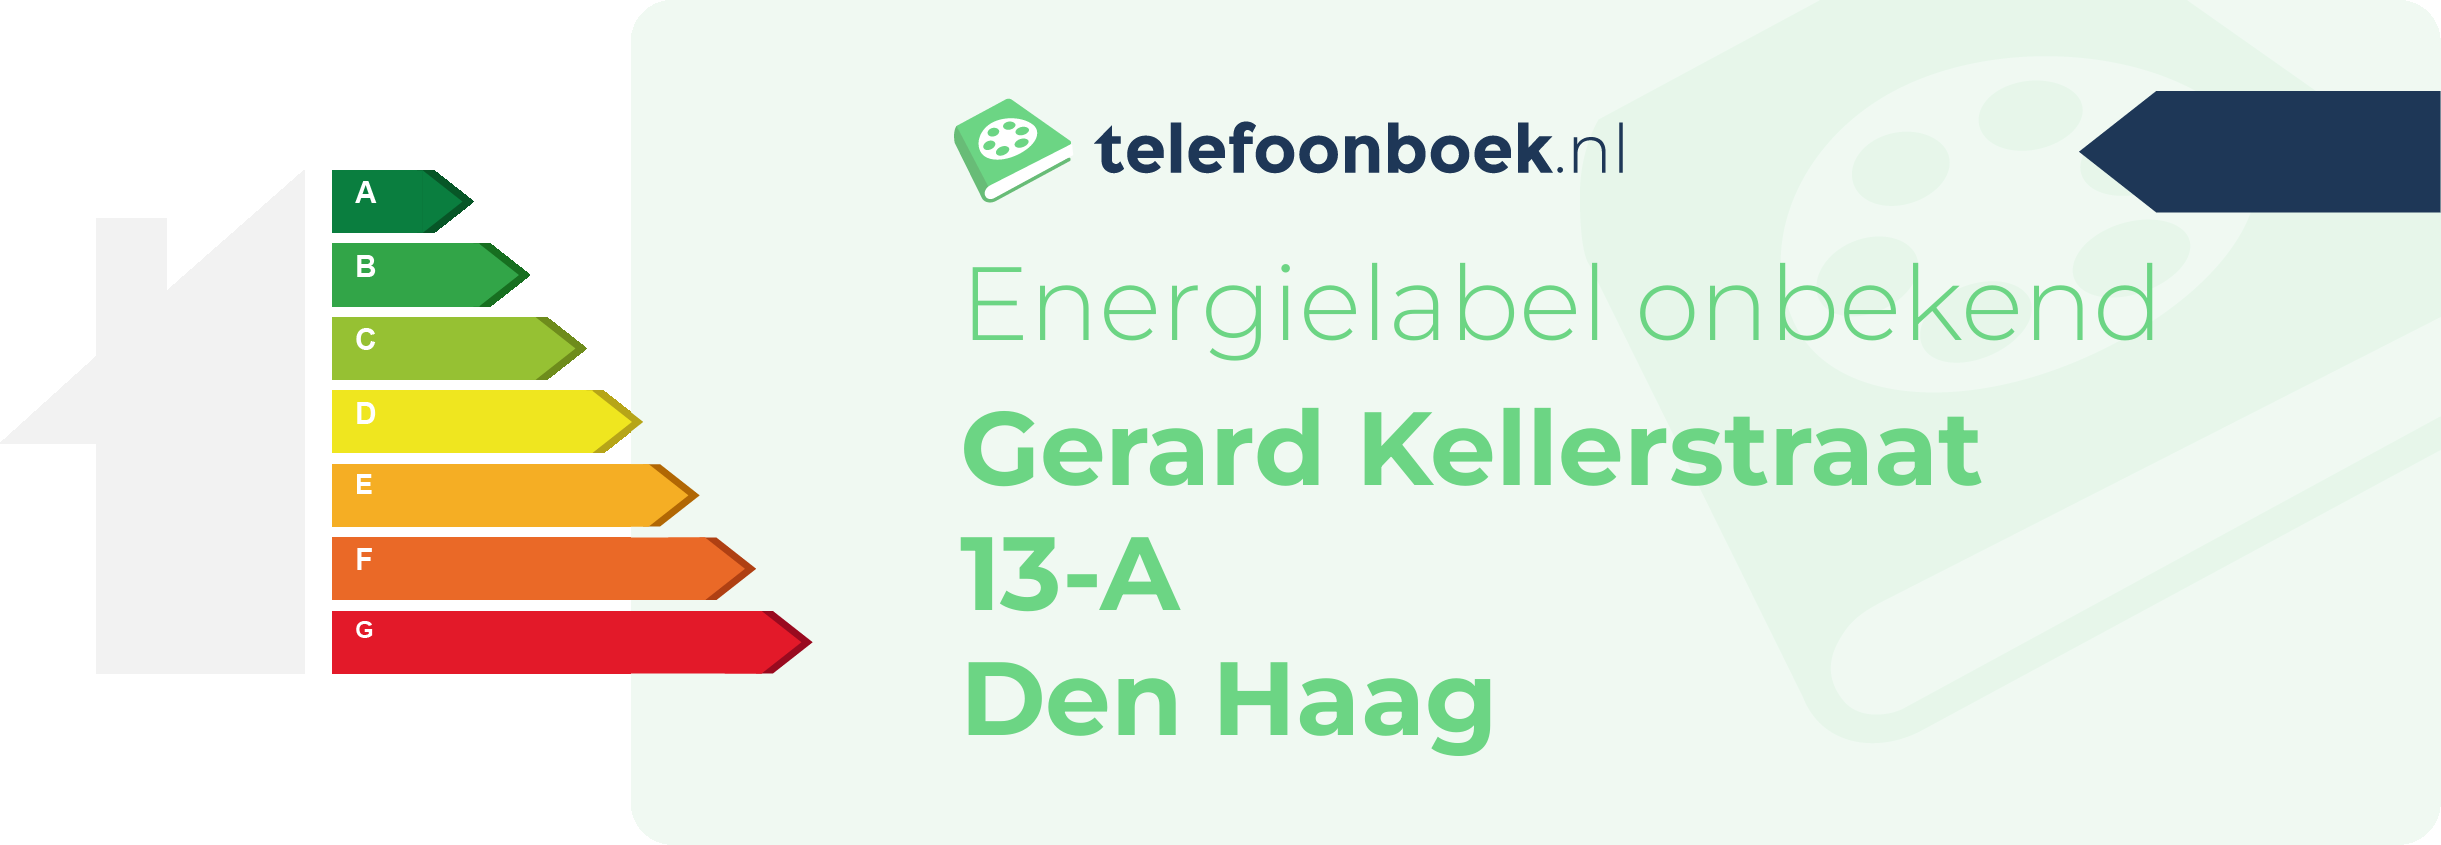 Energielabel Gerard Kellerstraat 13-A Den Haag